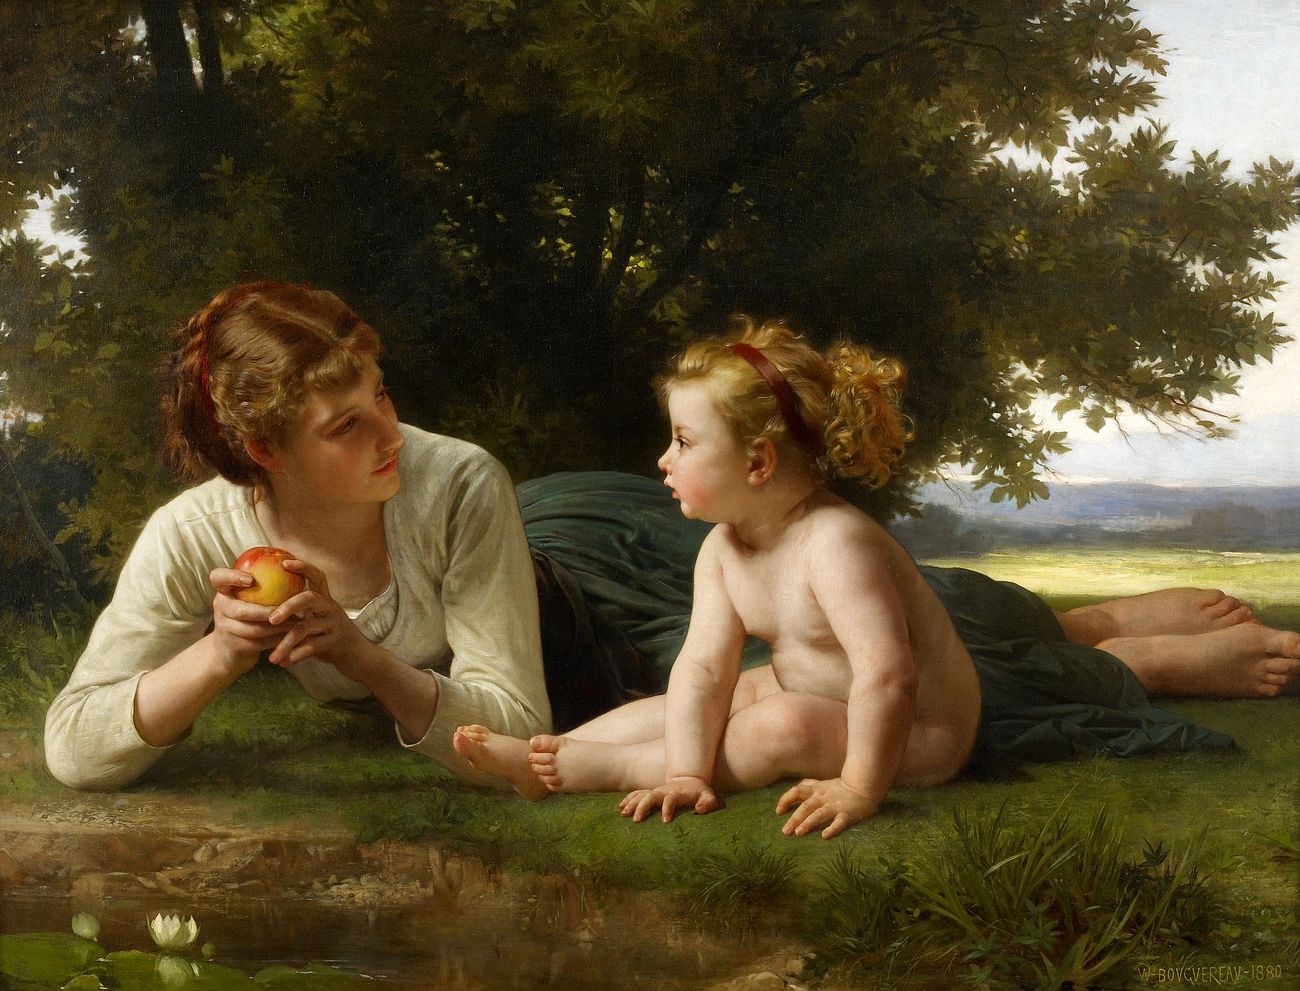 William-Adolphe Bouguereau's Temptation (1880)